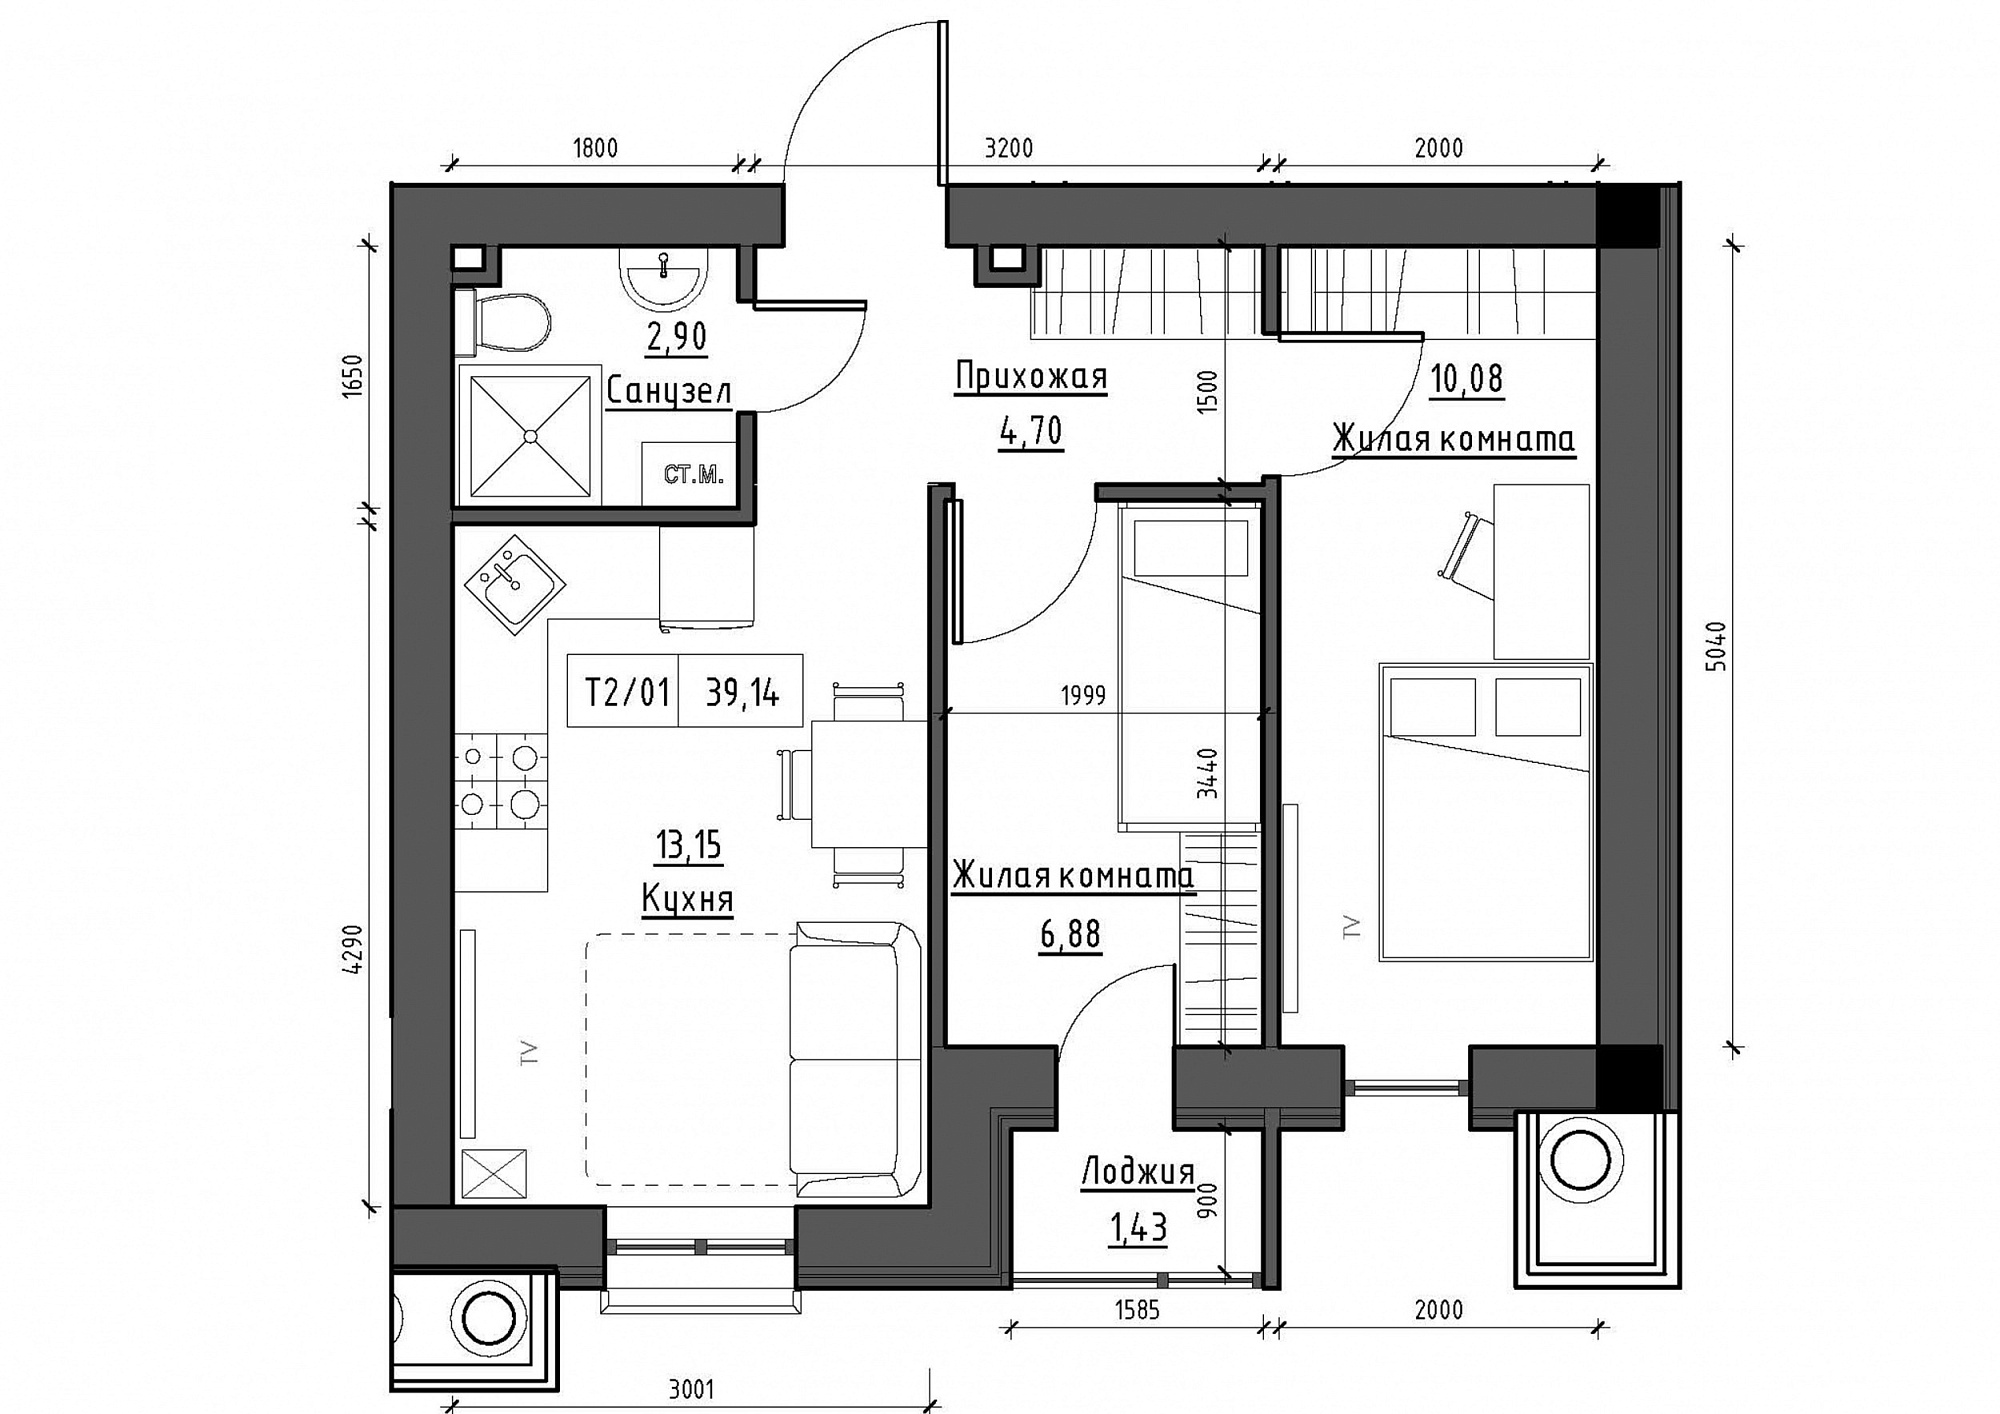 Planning 2-rm flats area 39.14m2, KS-012-01/0005.